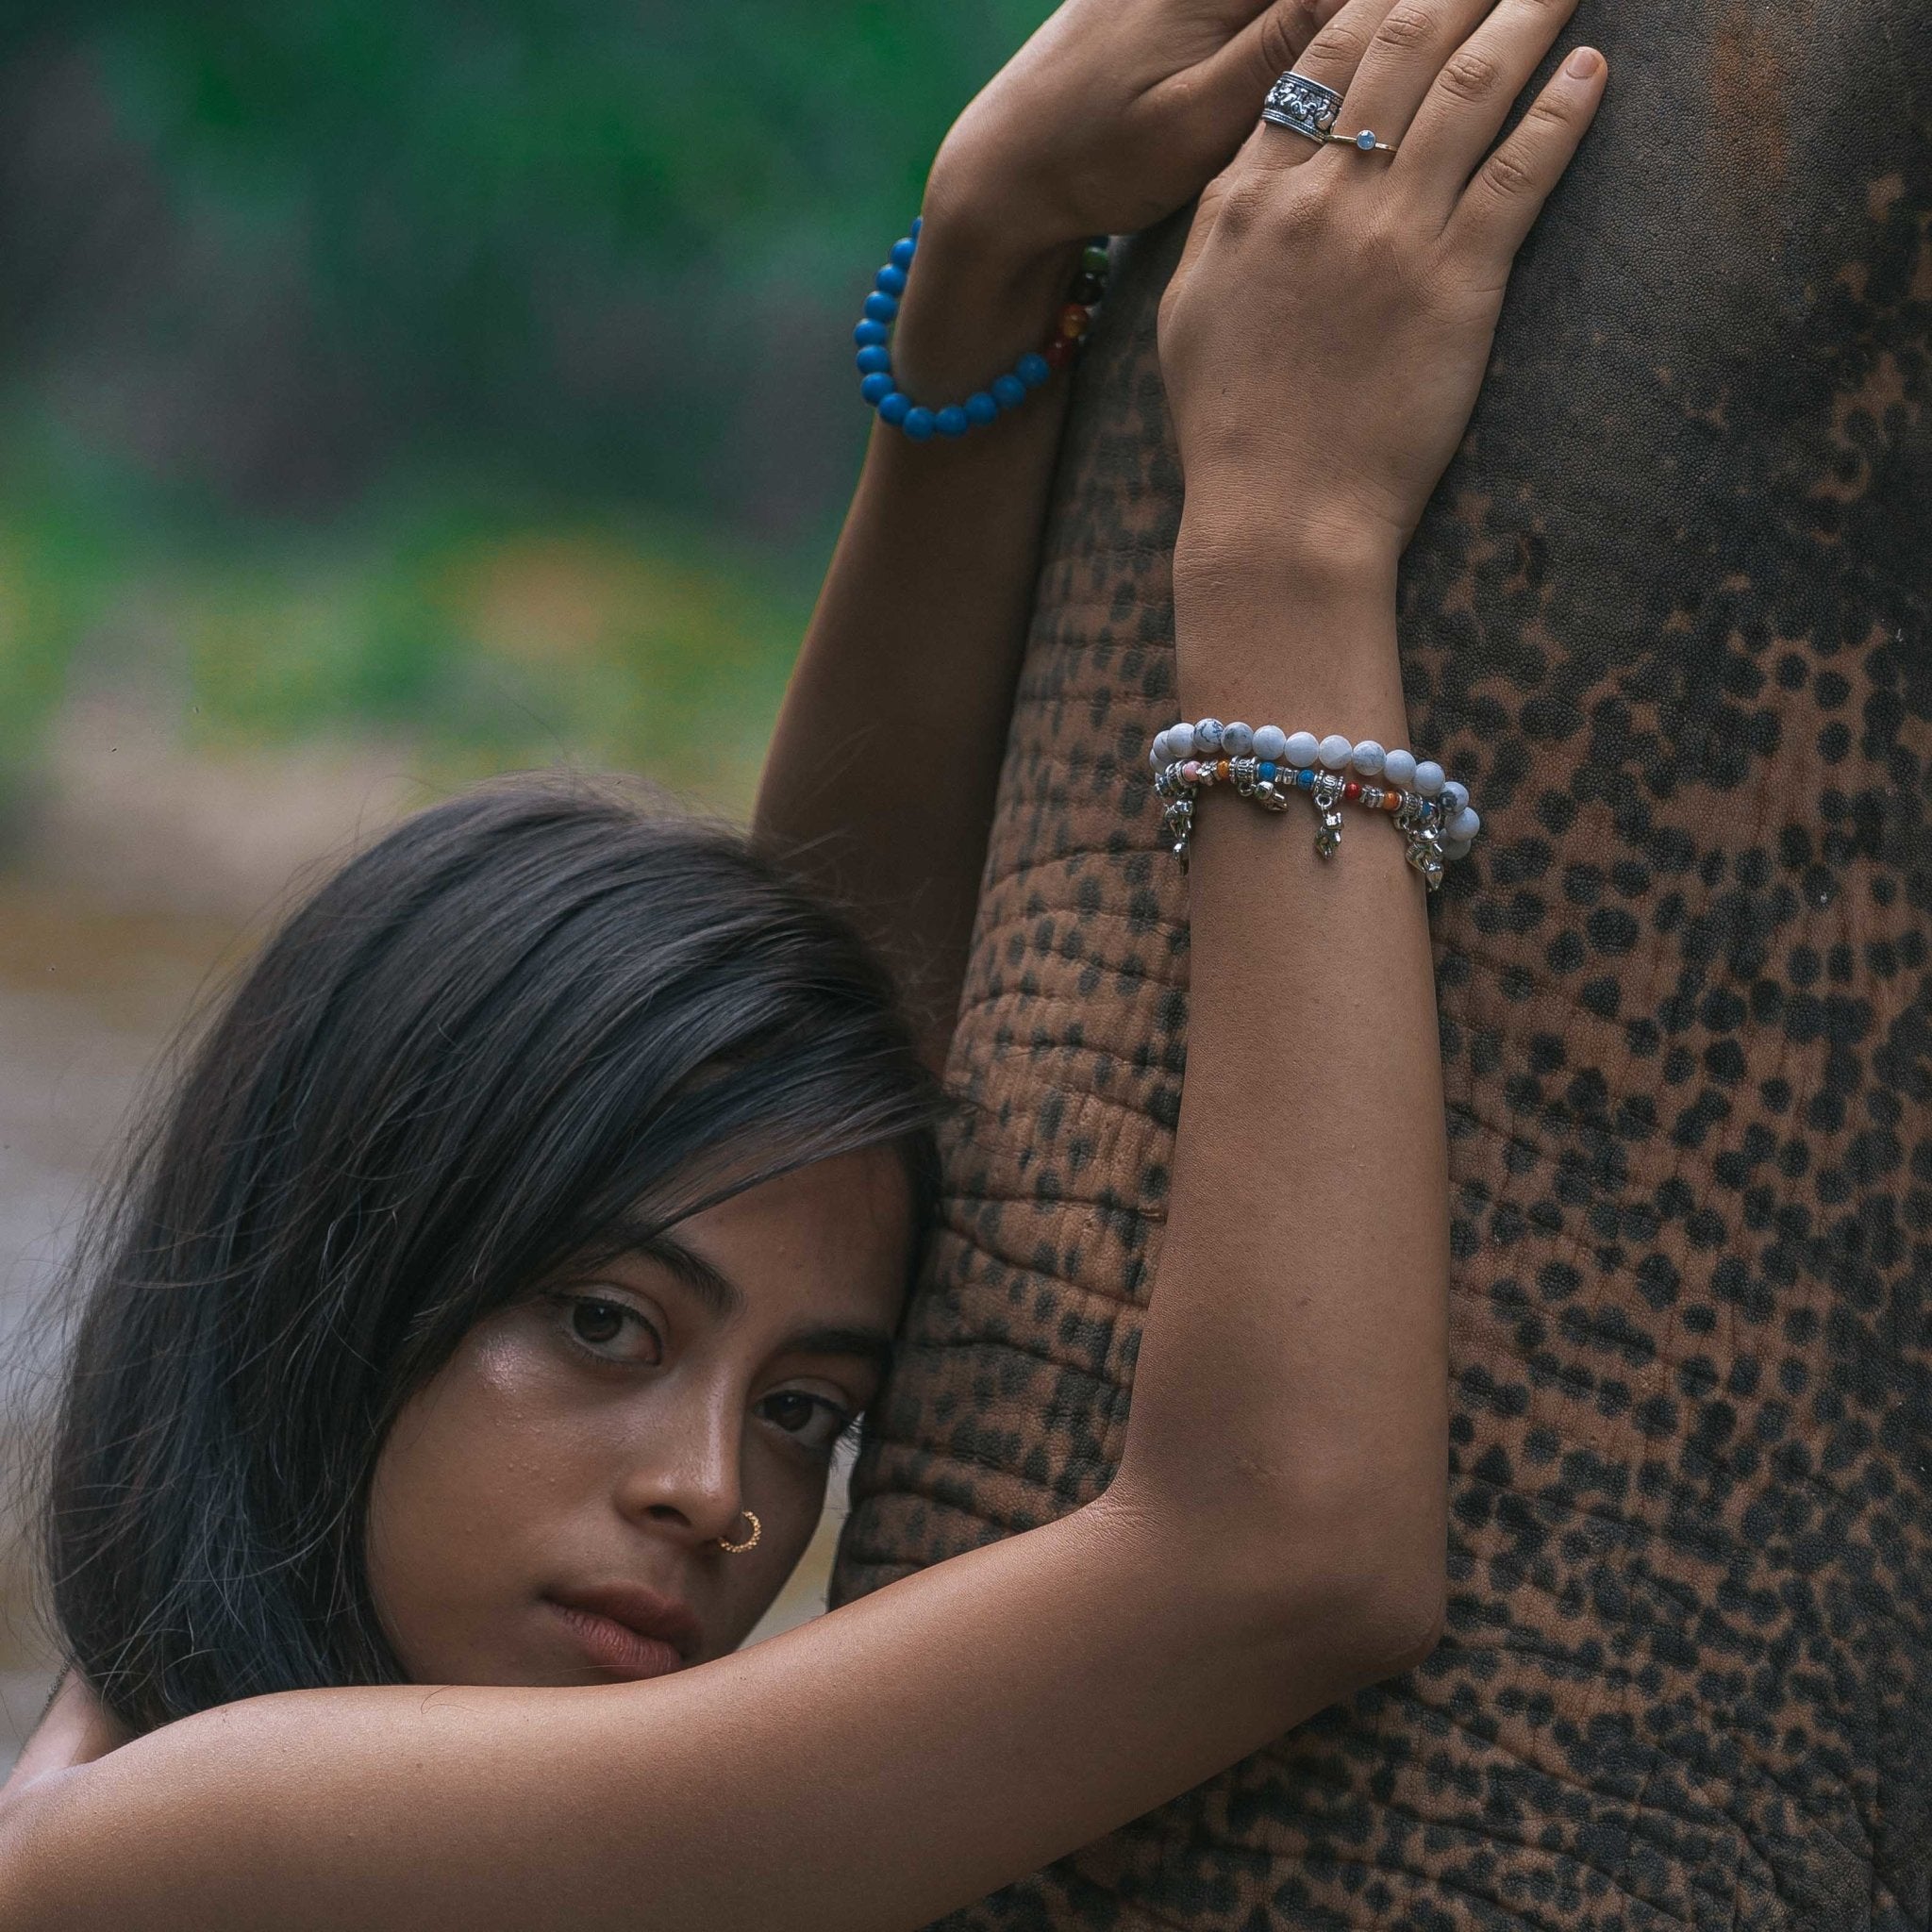 KRABI ELEPHANT BRACELET Elepanta Elephant Bracelet - Buy Today Elephant Pants Jewelry And Bohemian Clothes Handmade In Thailand Help To Save The Elephants FairTrade And Vegan